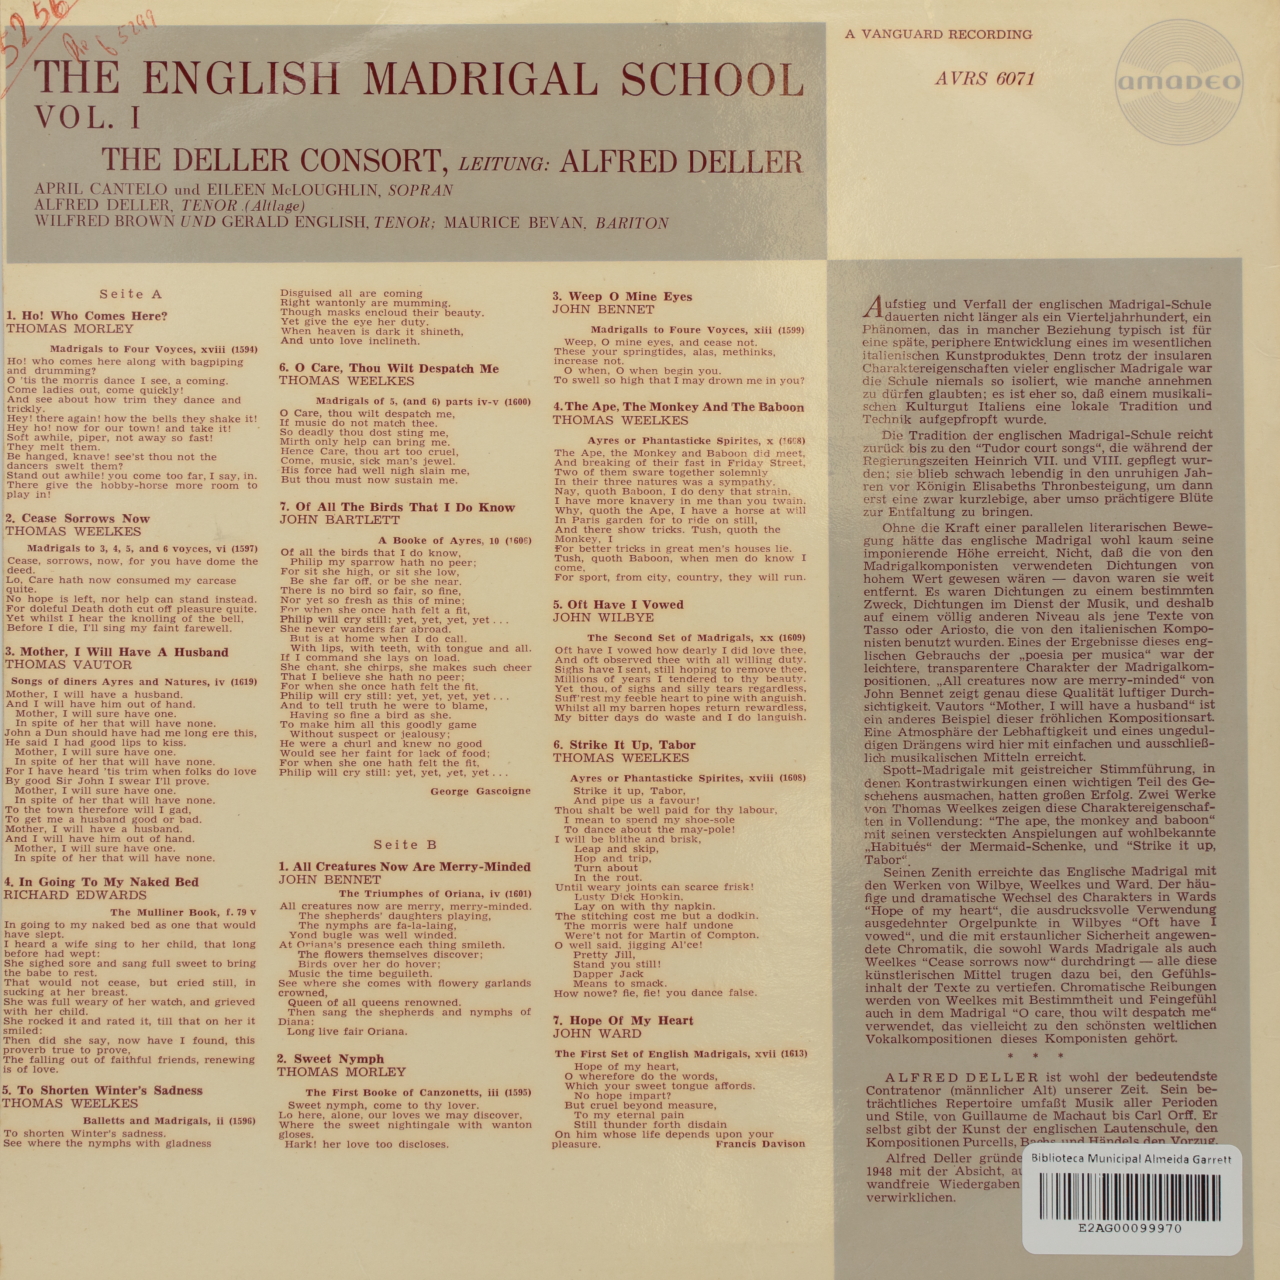 The English Madrigal School Vol. I